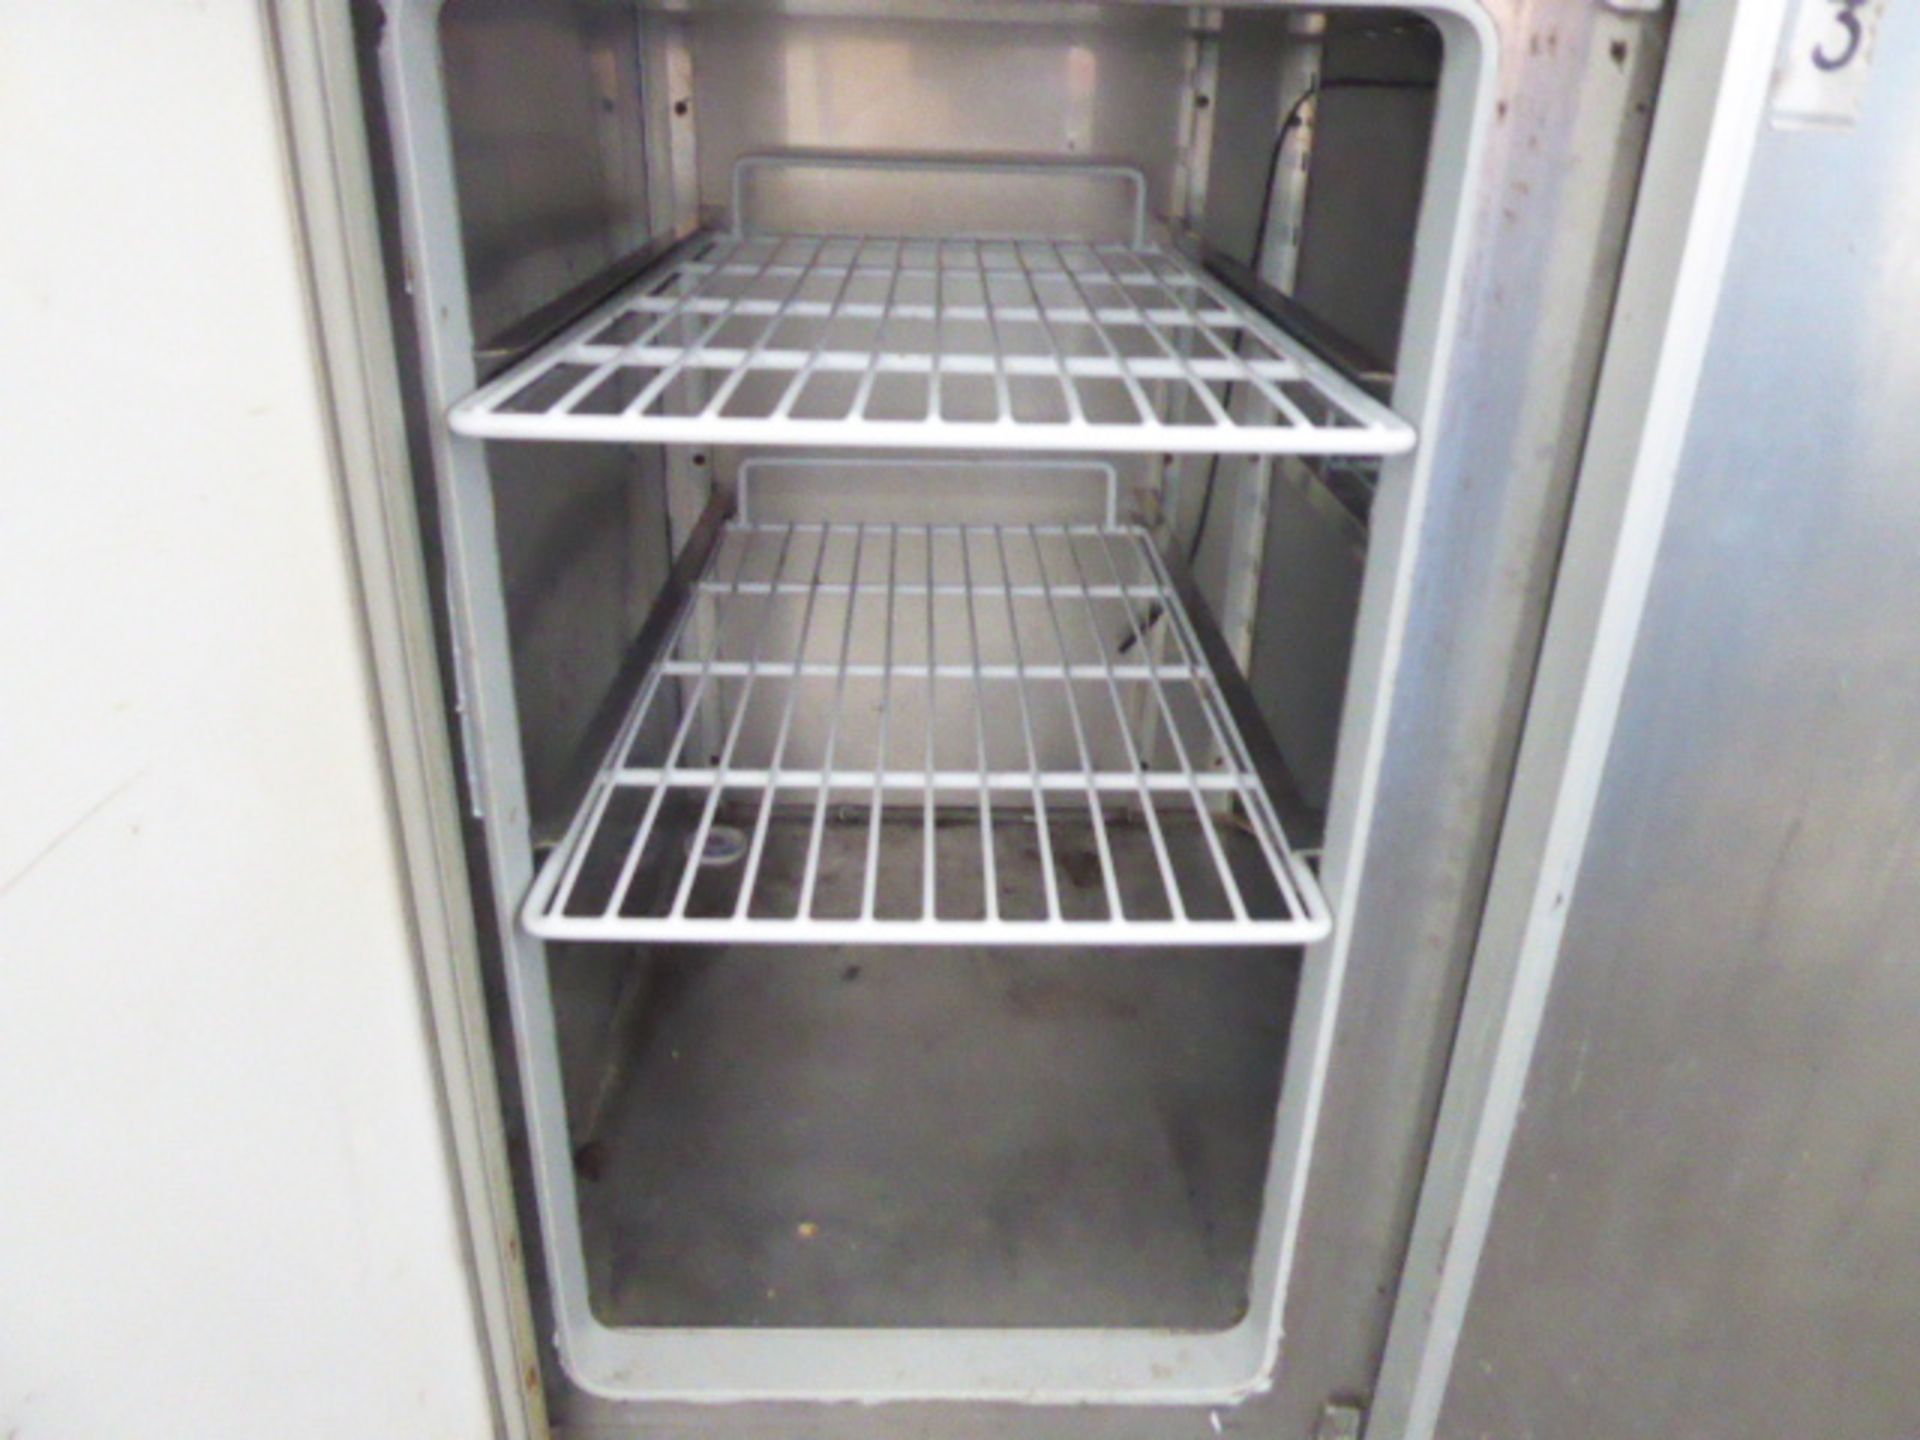 140cm Asland counter fridge with 2 doors (116) - Image 2 of 2